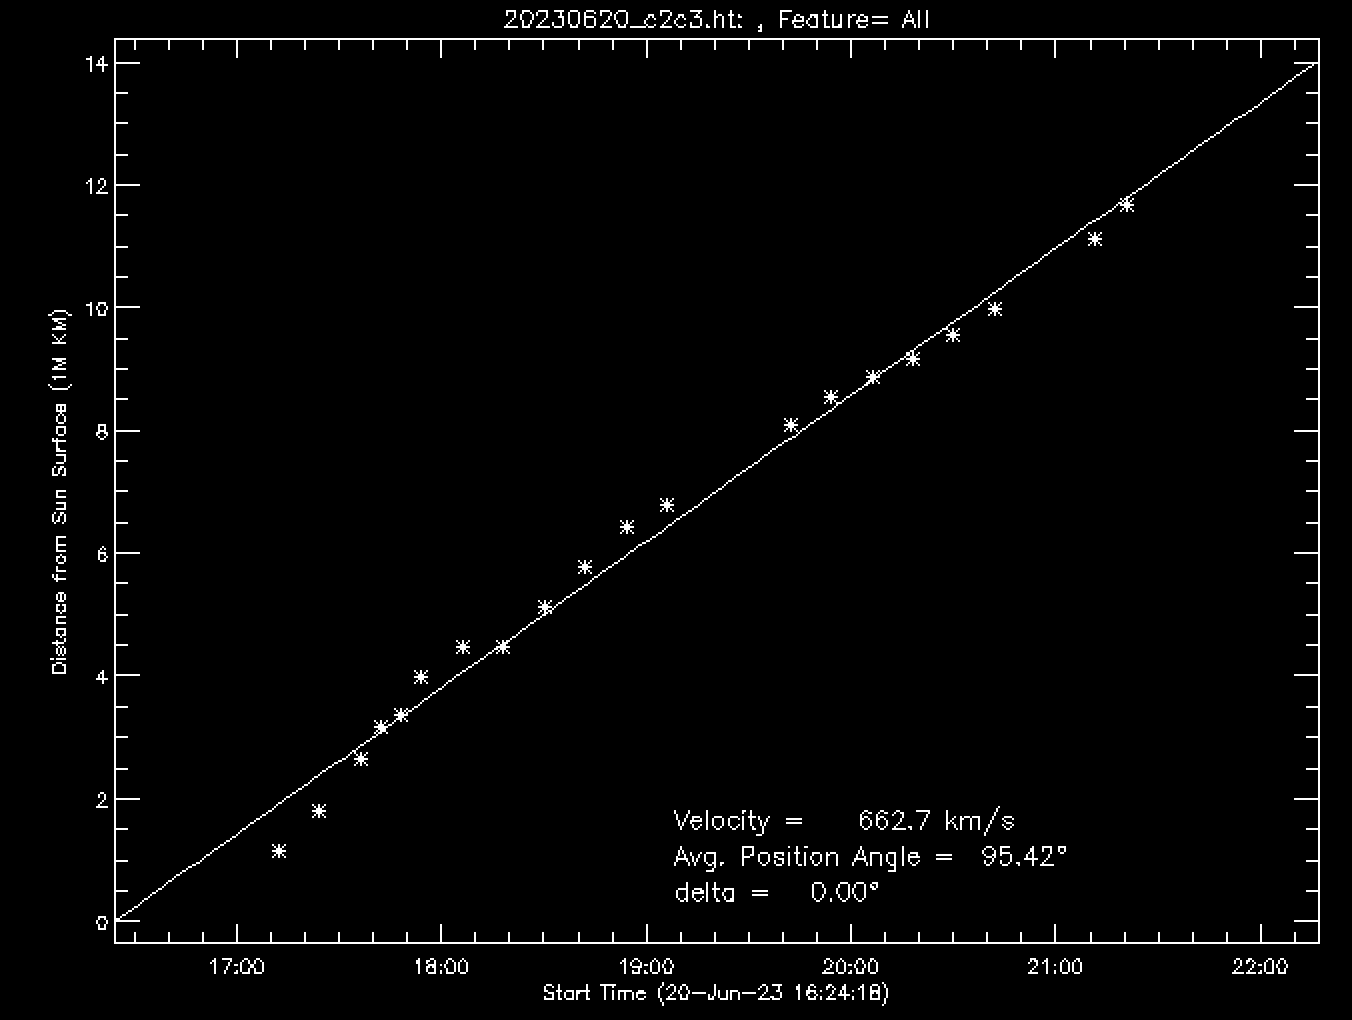 20230620_c2c3_velocity_graph.png